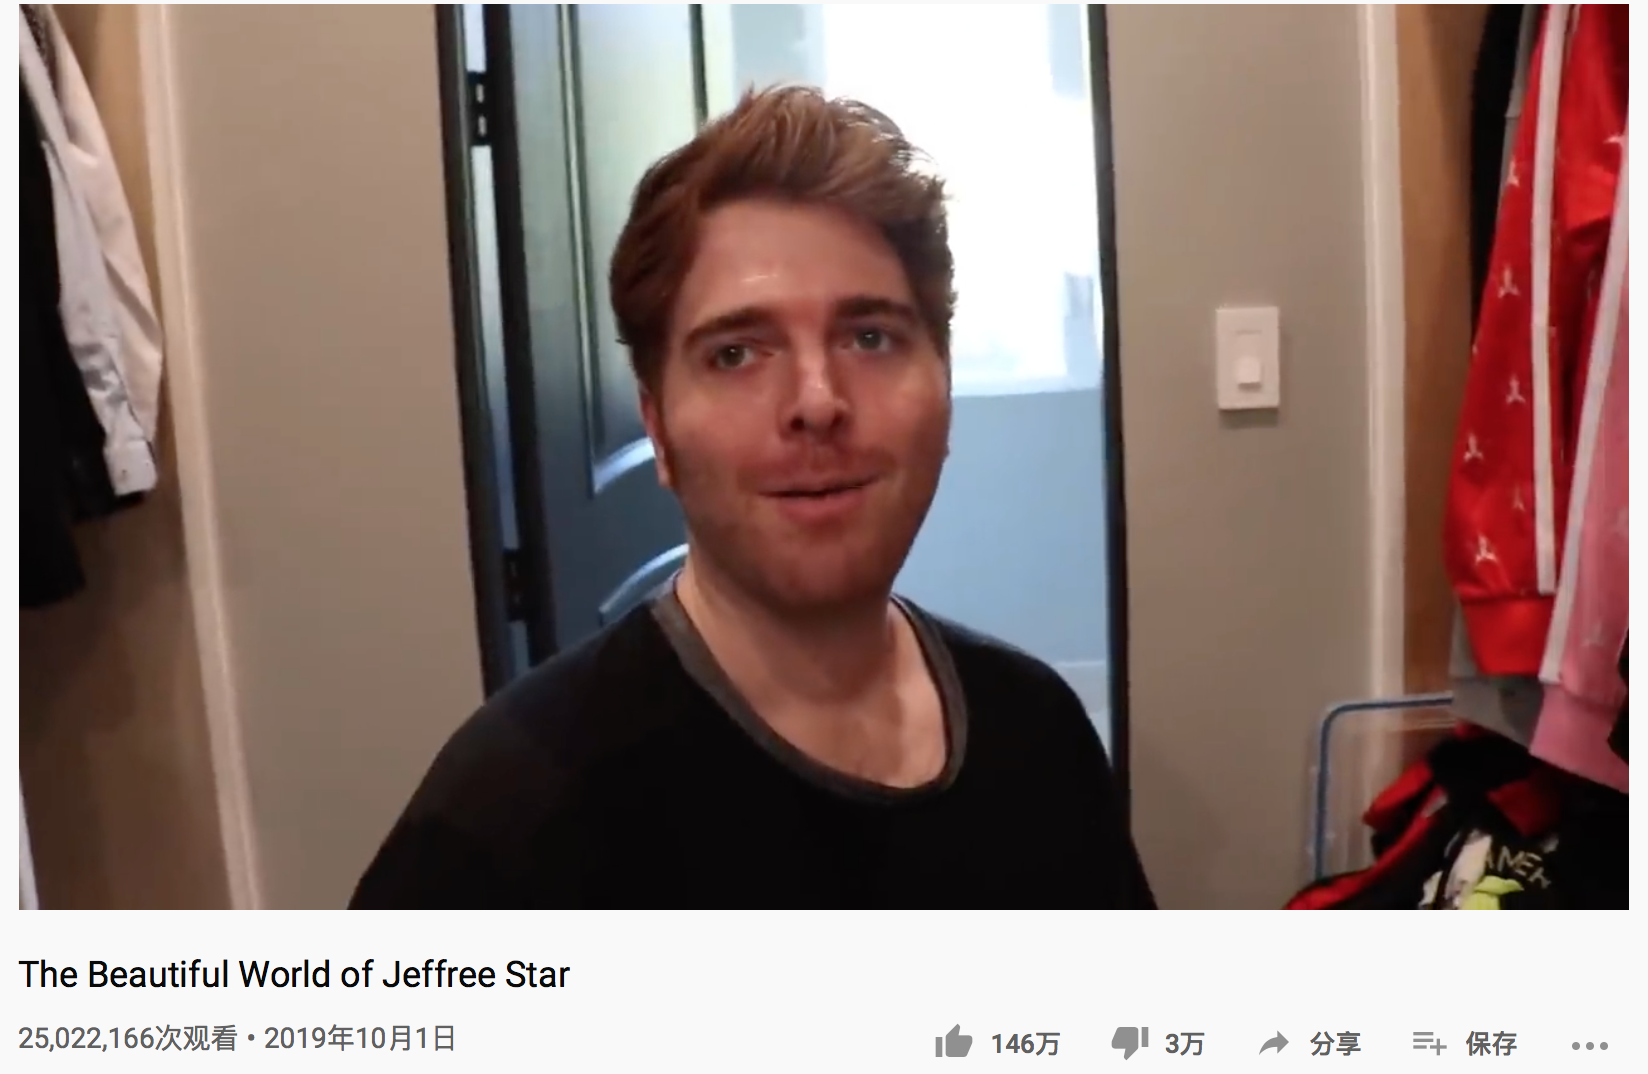 Shane The Beautiful World of Jeffree Star